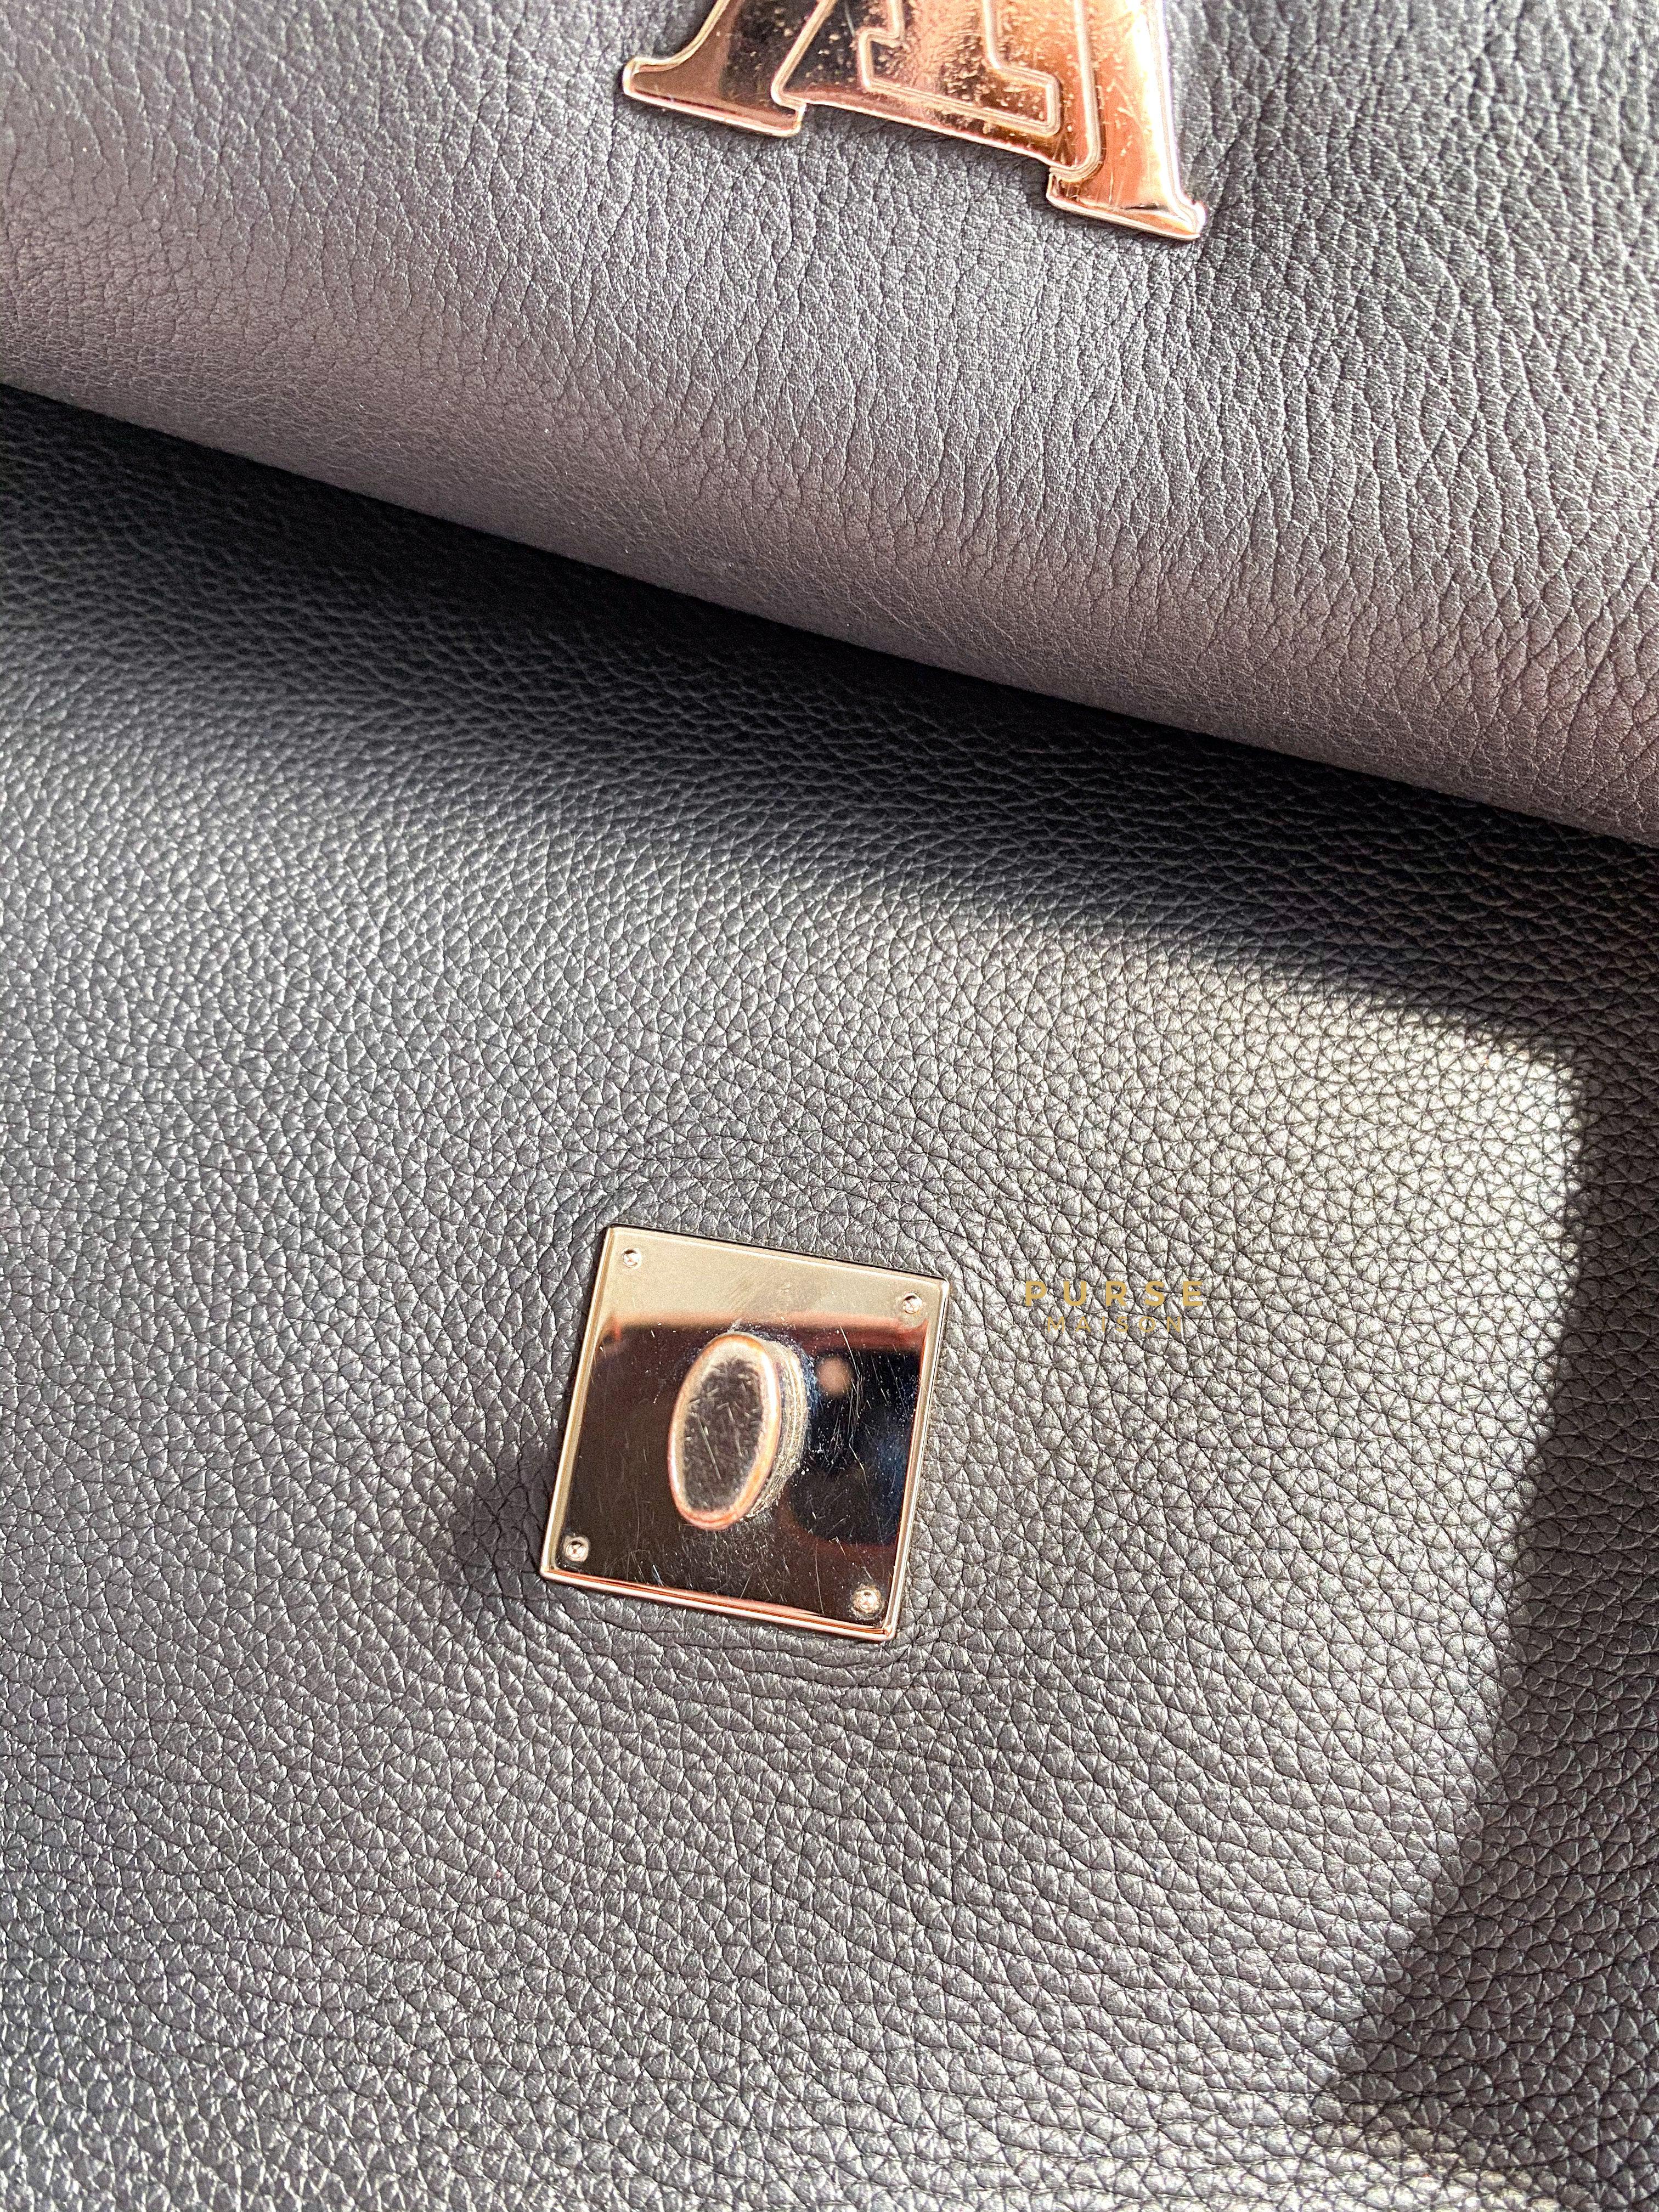 Louis Vuitton Lockme II Bag in Black Calfskin Leather (Date code: FL0127) | Purse Maison Luxury Bags Shop